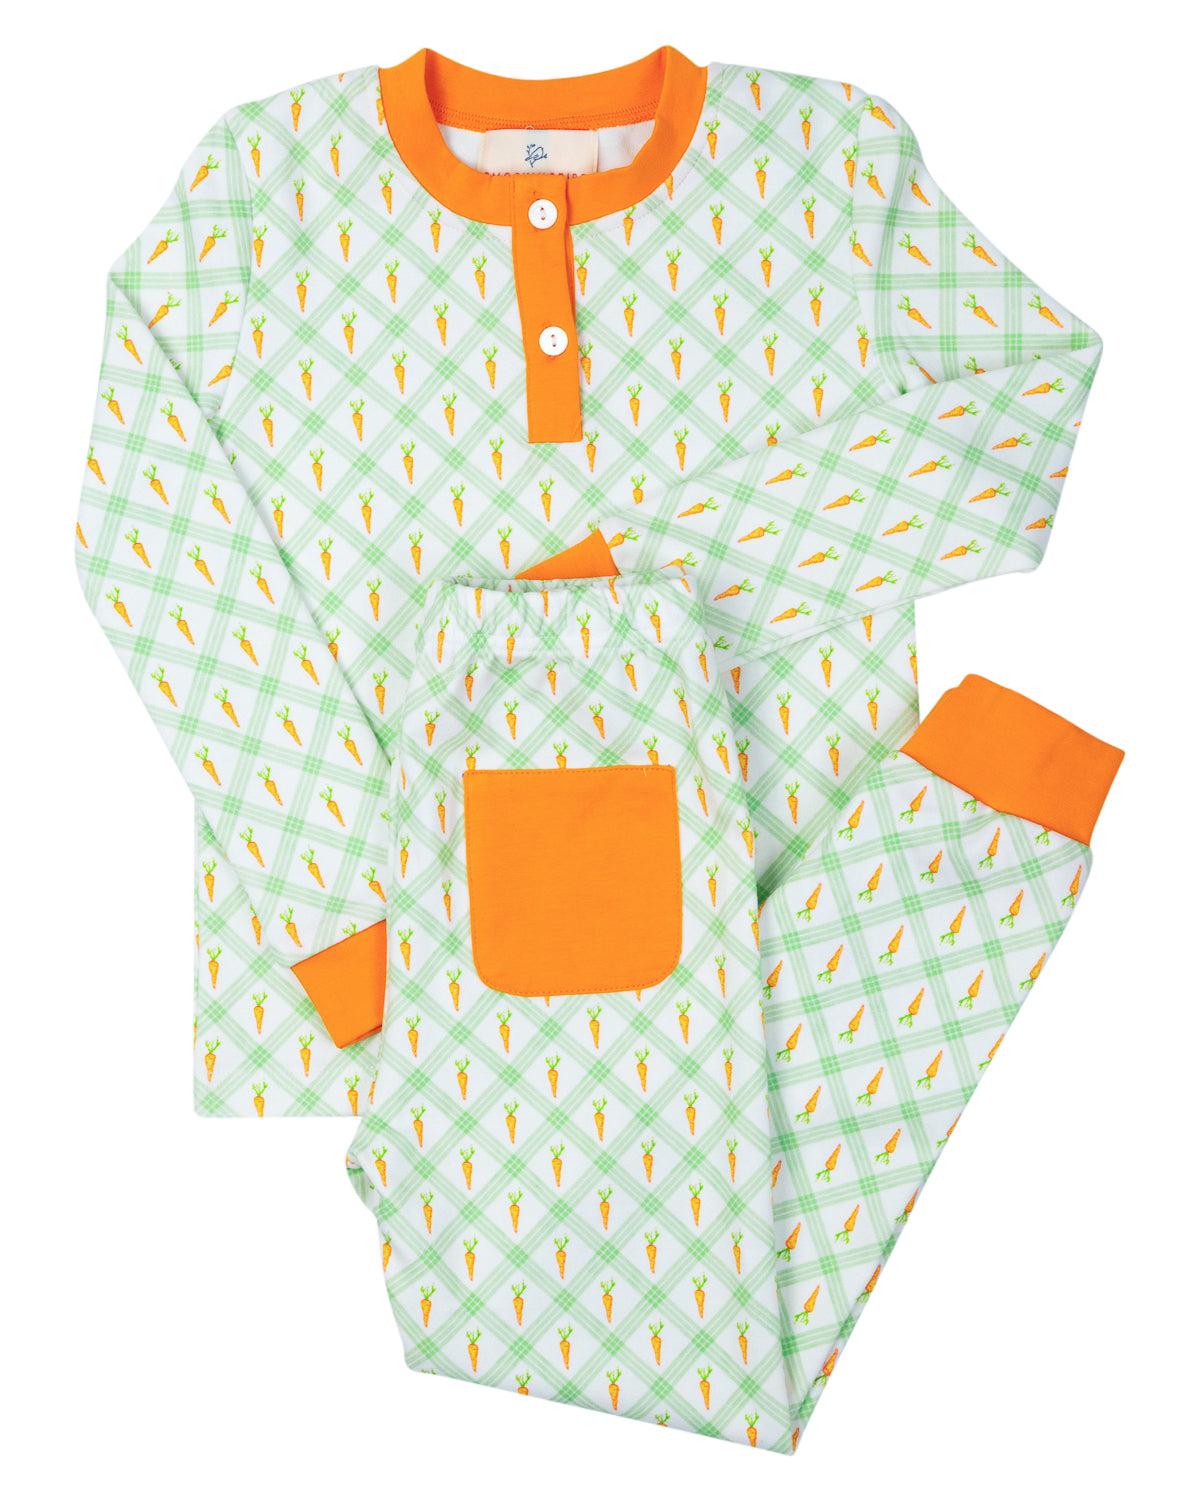 Carrot Crush Knit Pajama Set-FINAL SALE